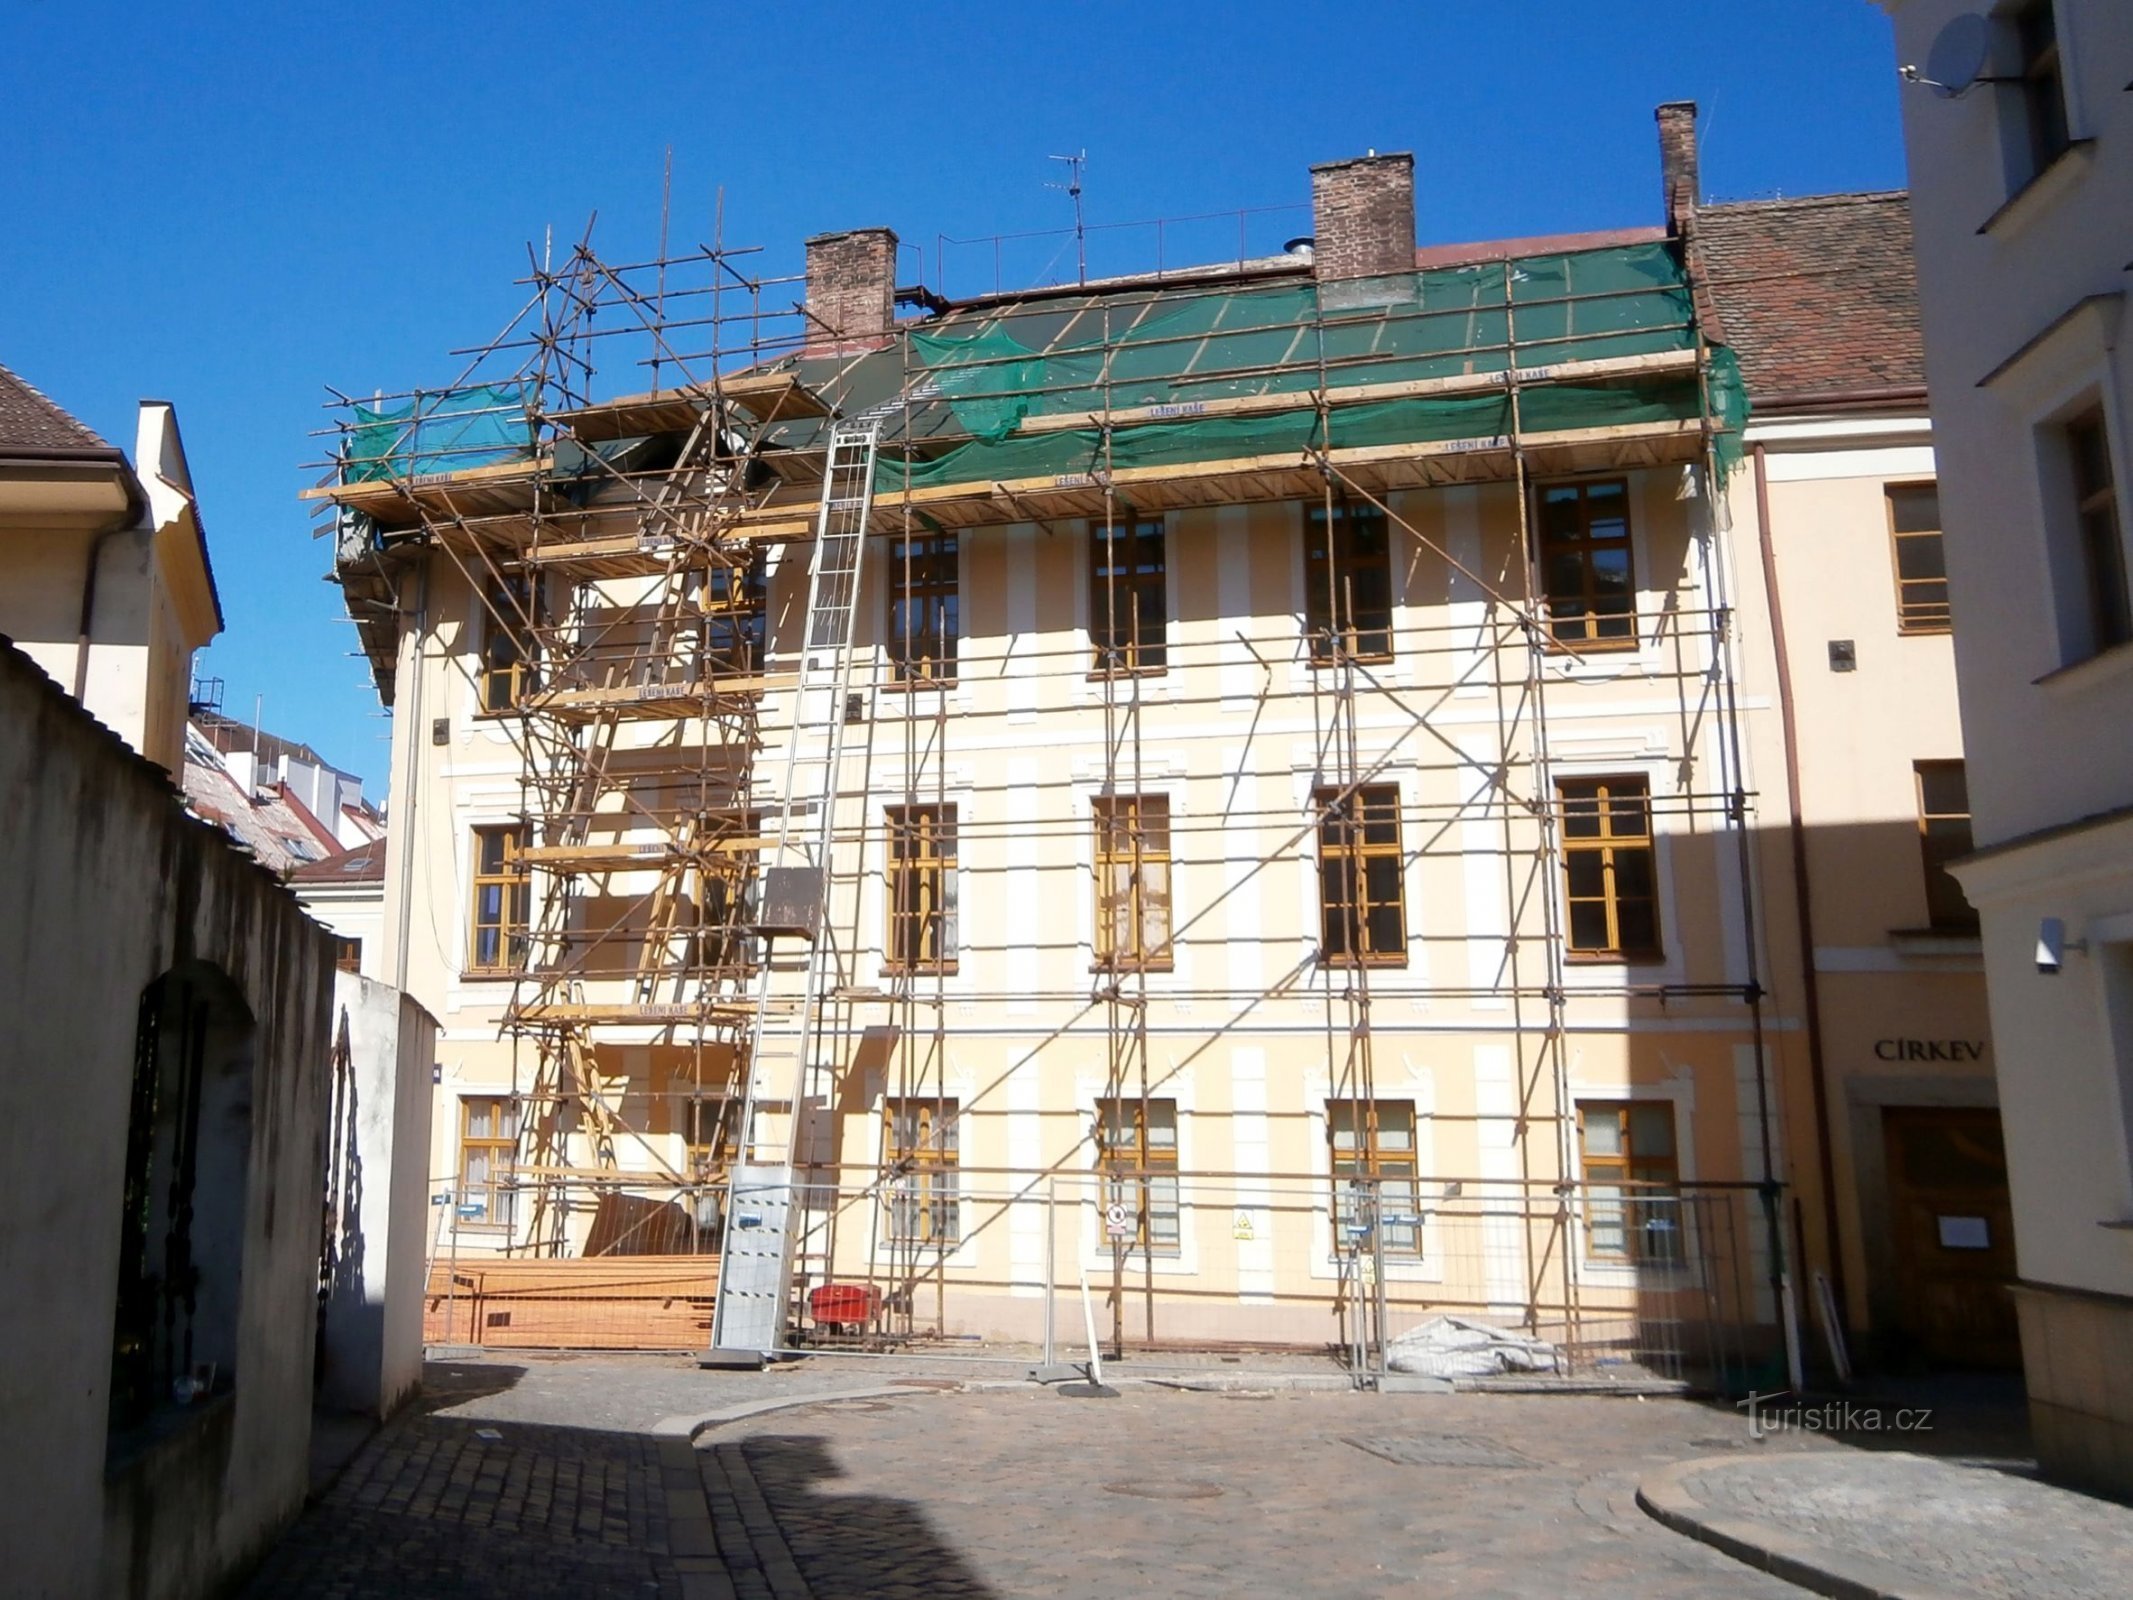 Reparación del techo en el nº 89 (Hradec Králové, 18.6.2016/XNUMX/XNUMX)